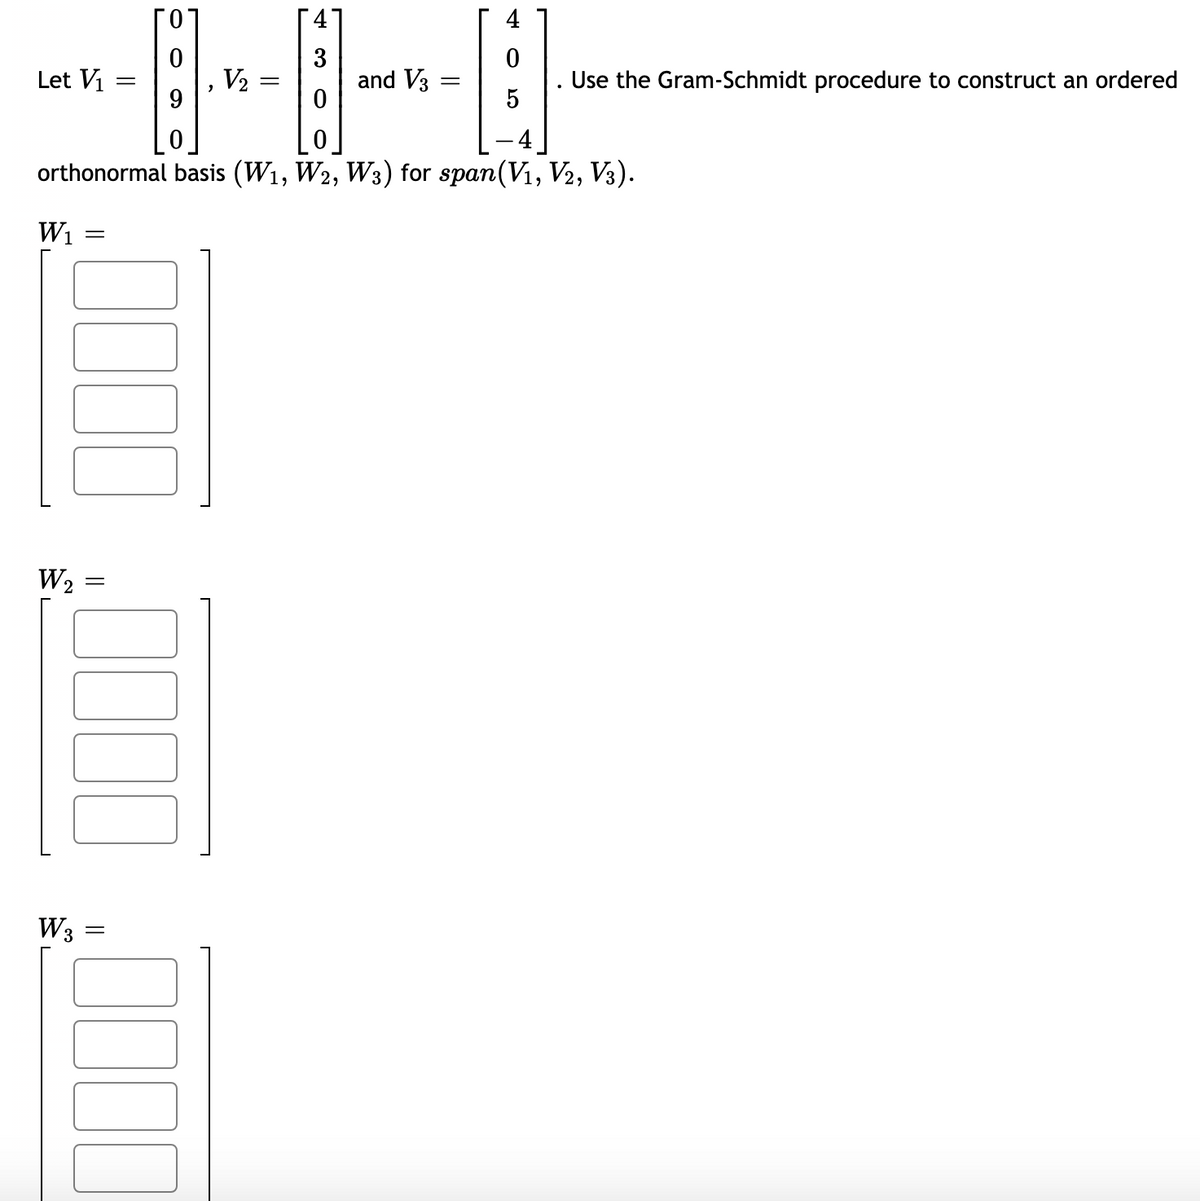 4
3
and V3
Use the Gram-Schmidt procedure to construct an ordered
Let Vi
V2
orthonormal basis (W1, W2, W3) for span(V1, V2, V3).
W2
W3
